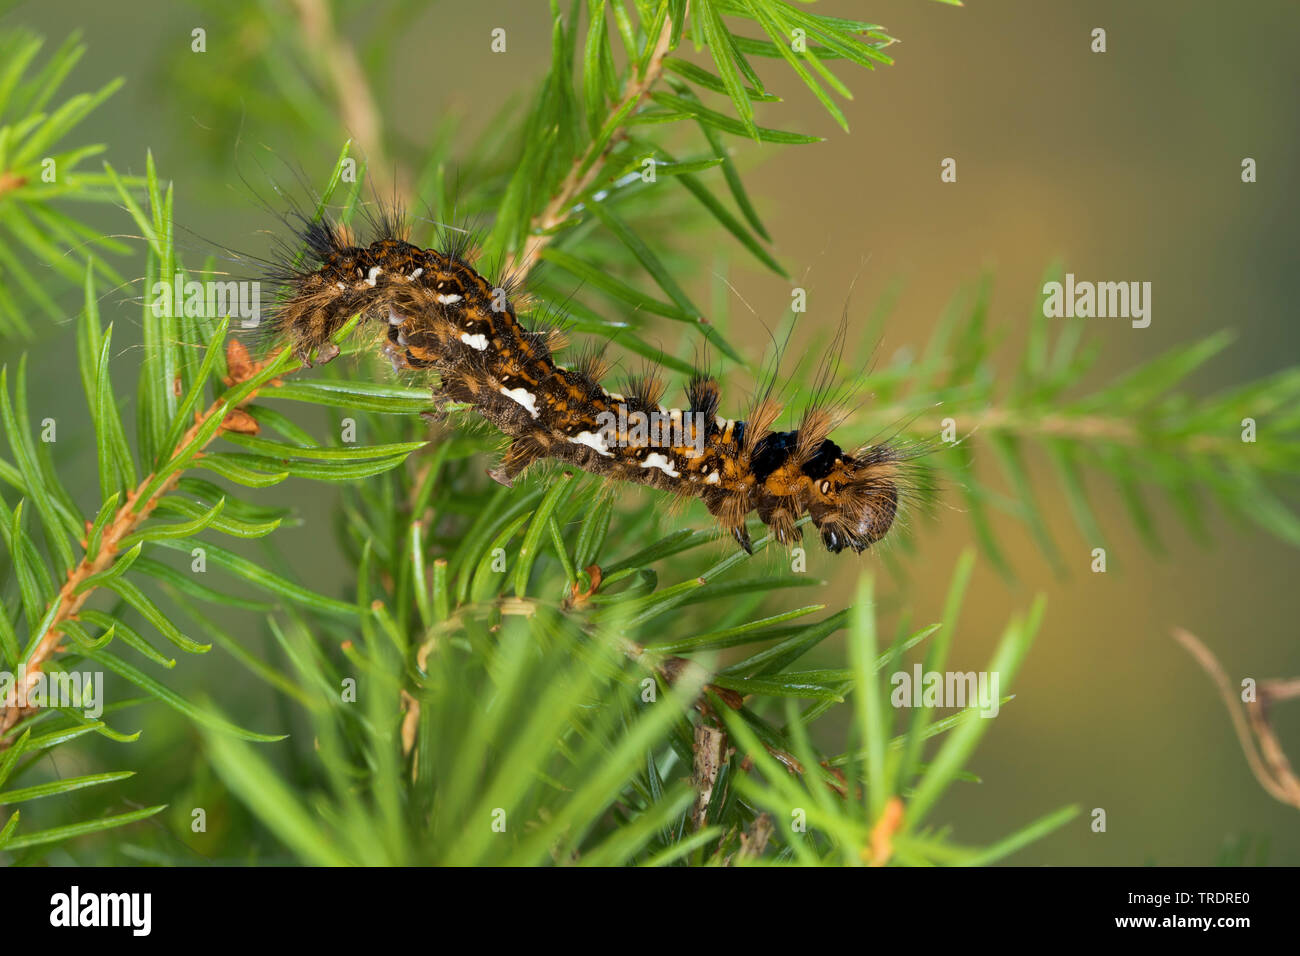 pine arches (Panthea coenobita), caterpillar feeding at spruce, Germany Stock Photo